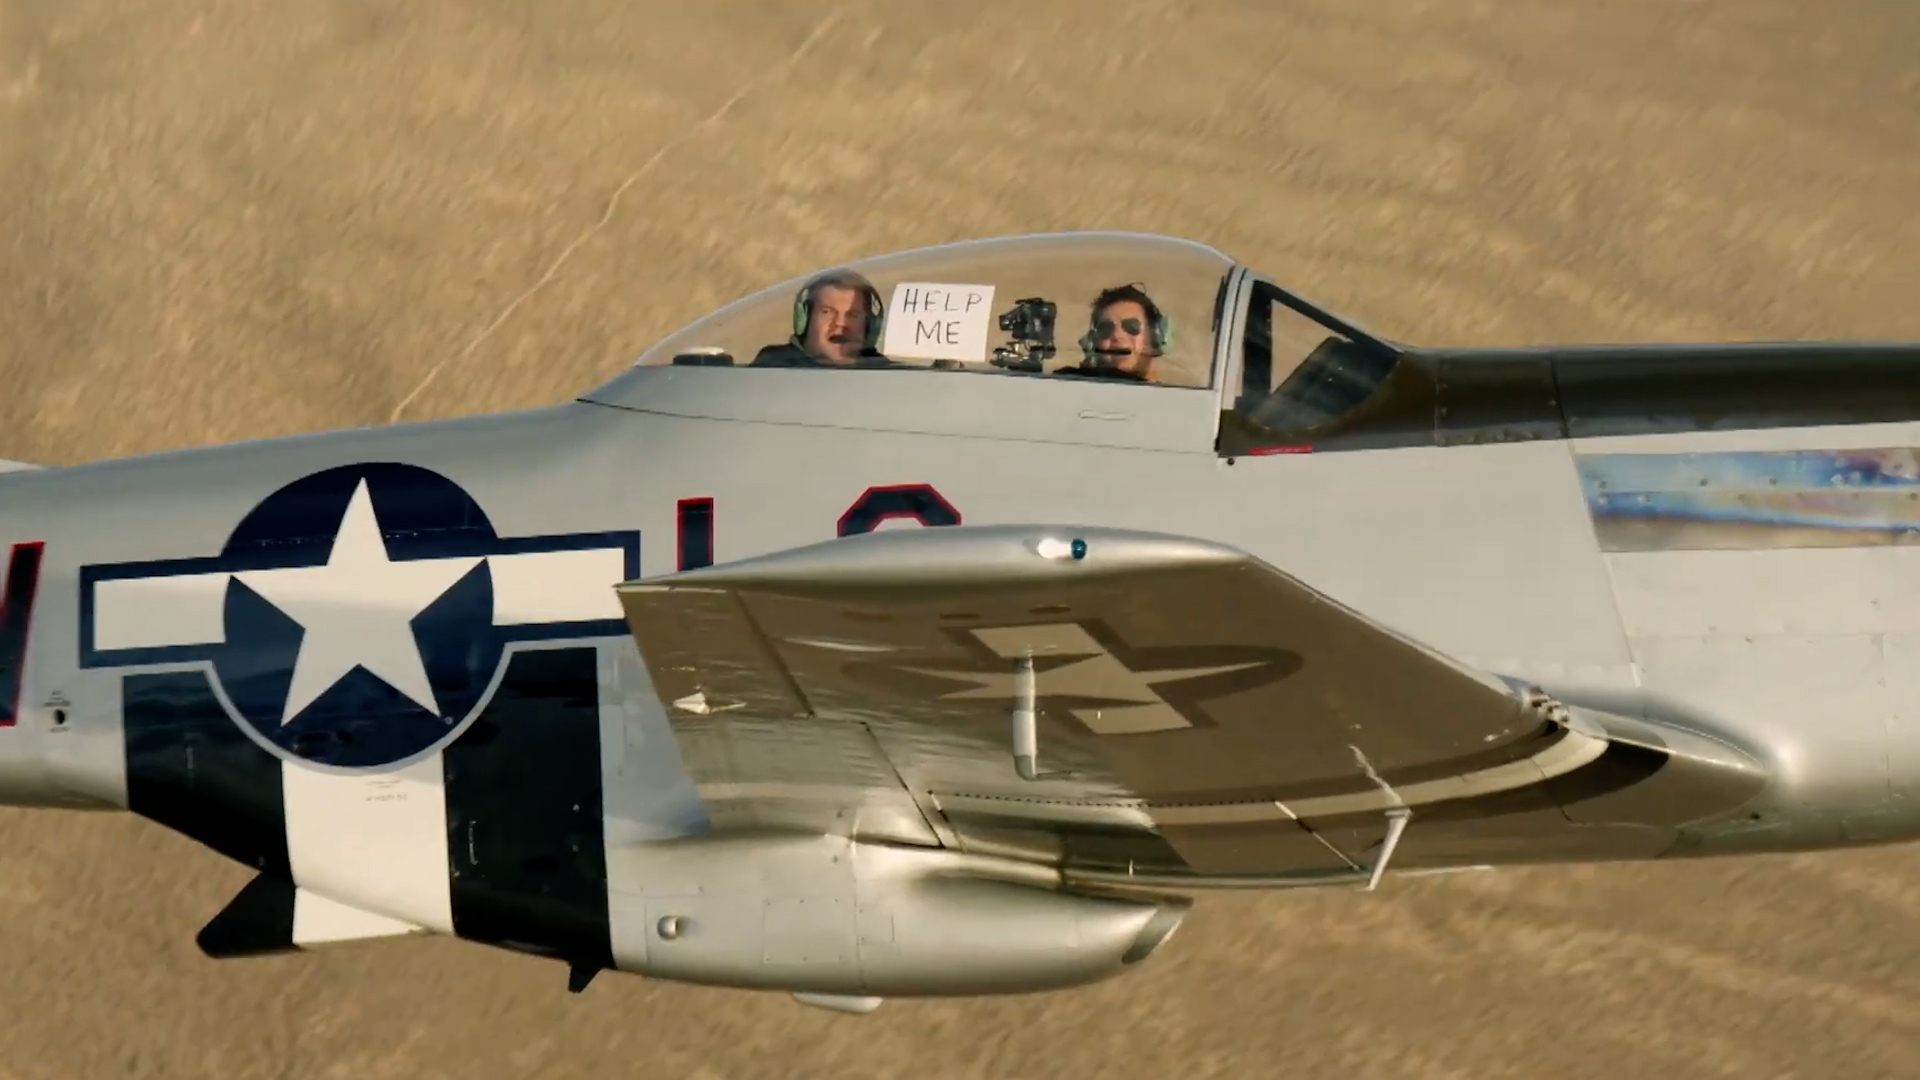 Video: Tom Cruise terrifies James Corden with wild plane ride - CNN Video